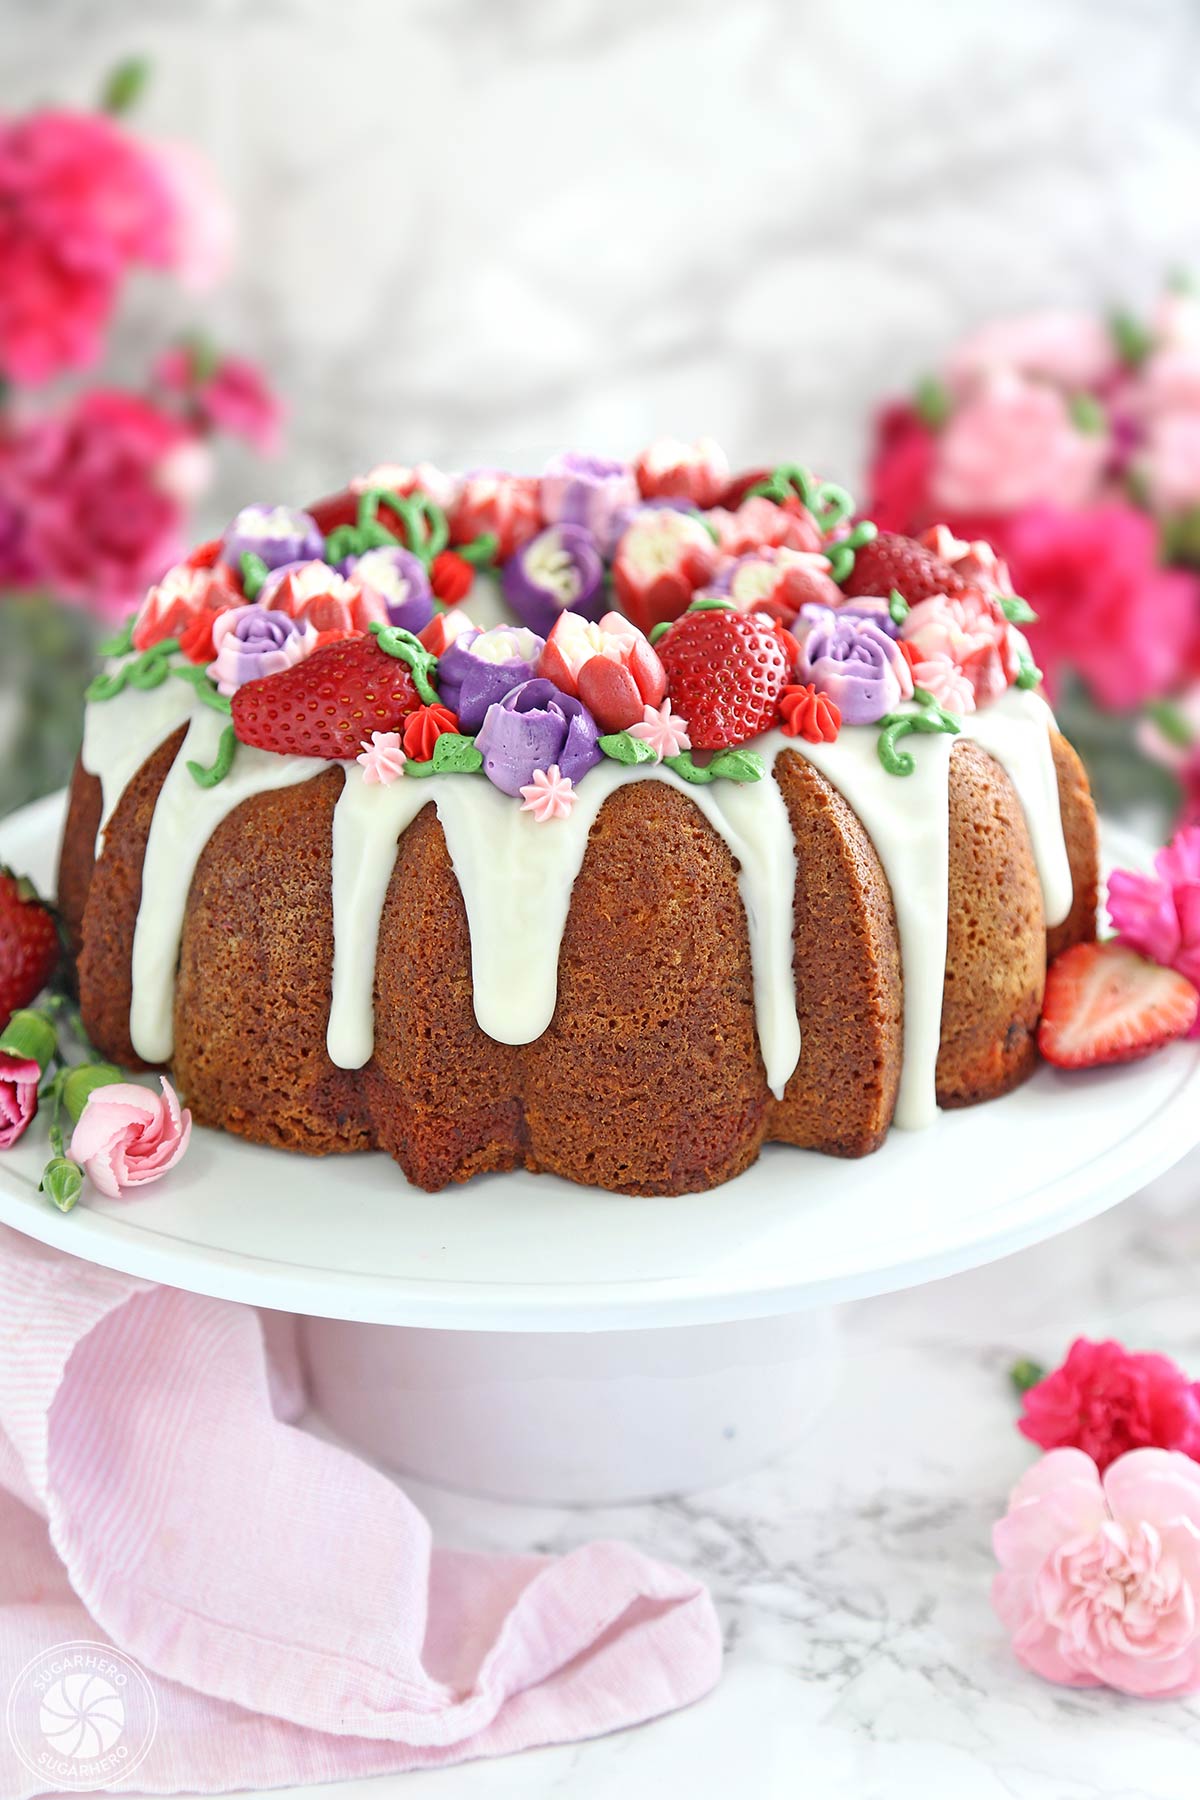 https://www.sugarhero.com/wp-content/uploads/2018/02/strawberry-swirl-bundt-cake-8.jpg